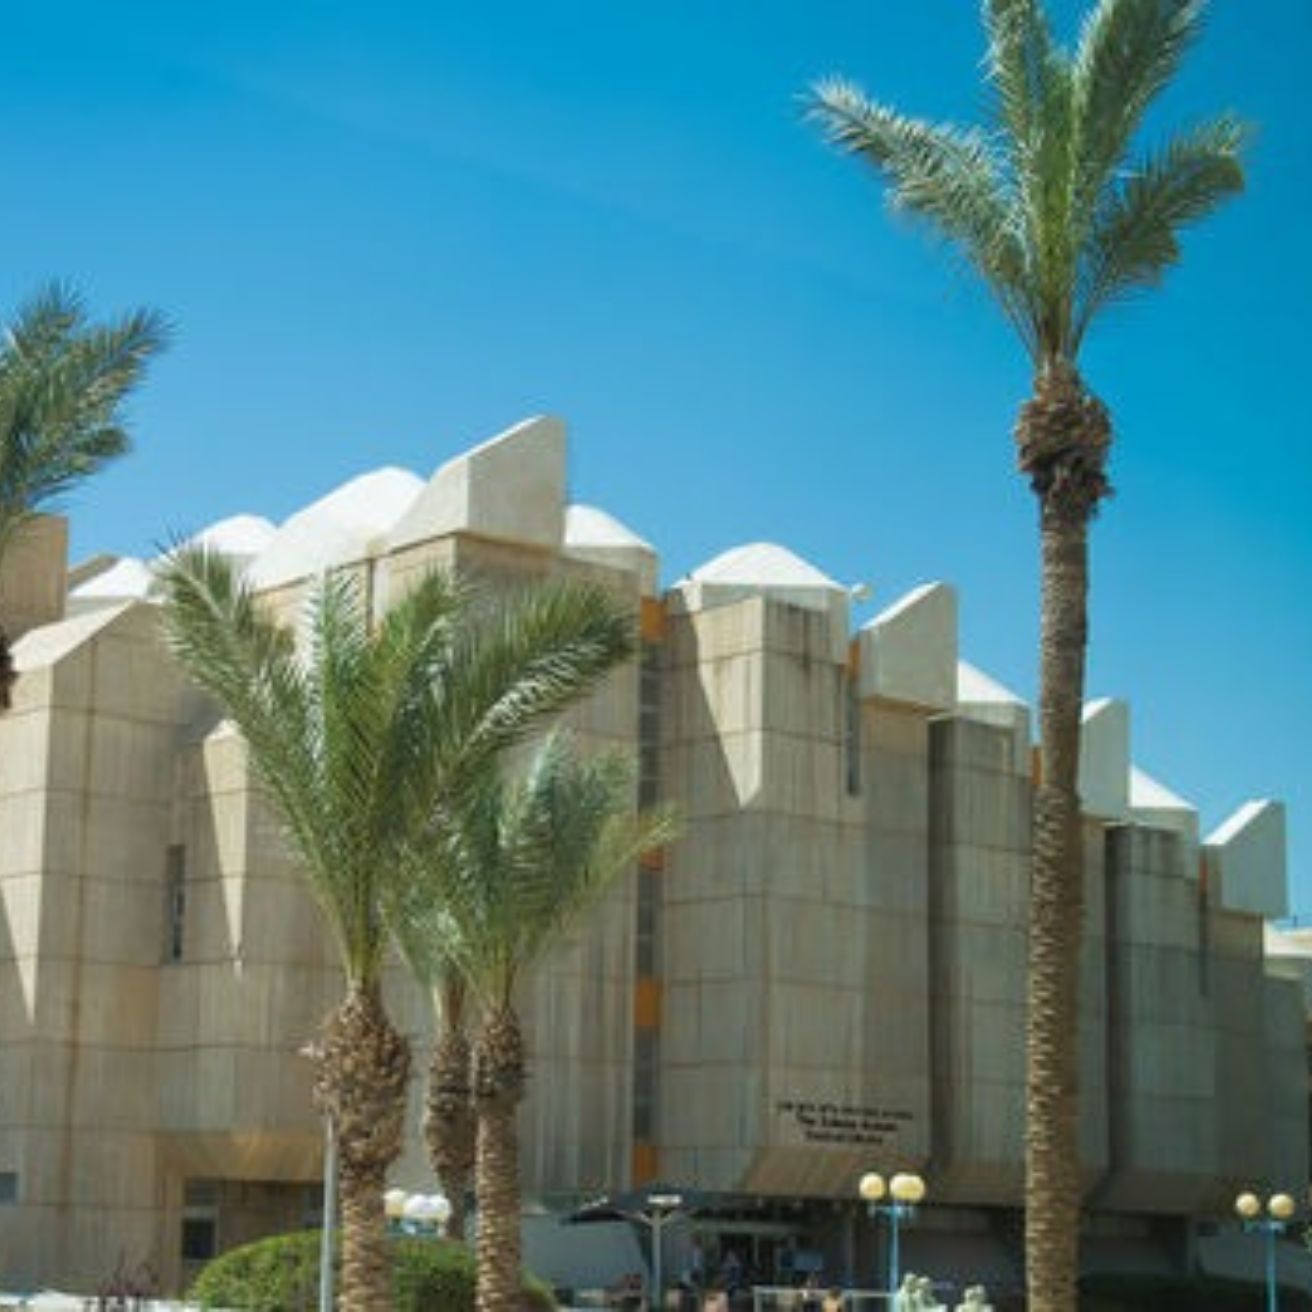 Ben-Gurion University of the Negev campus